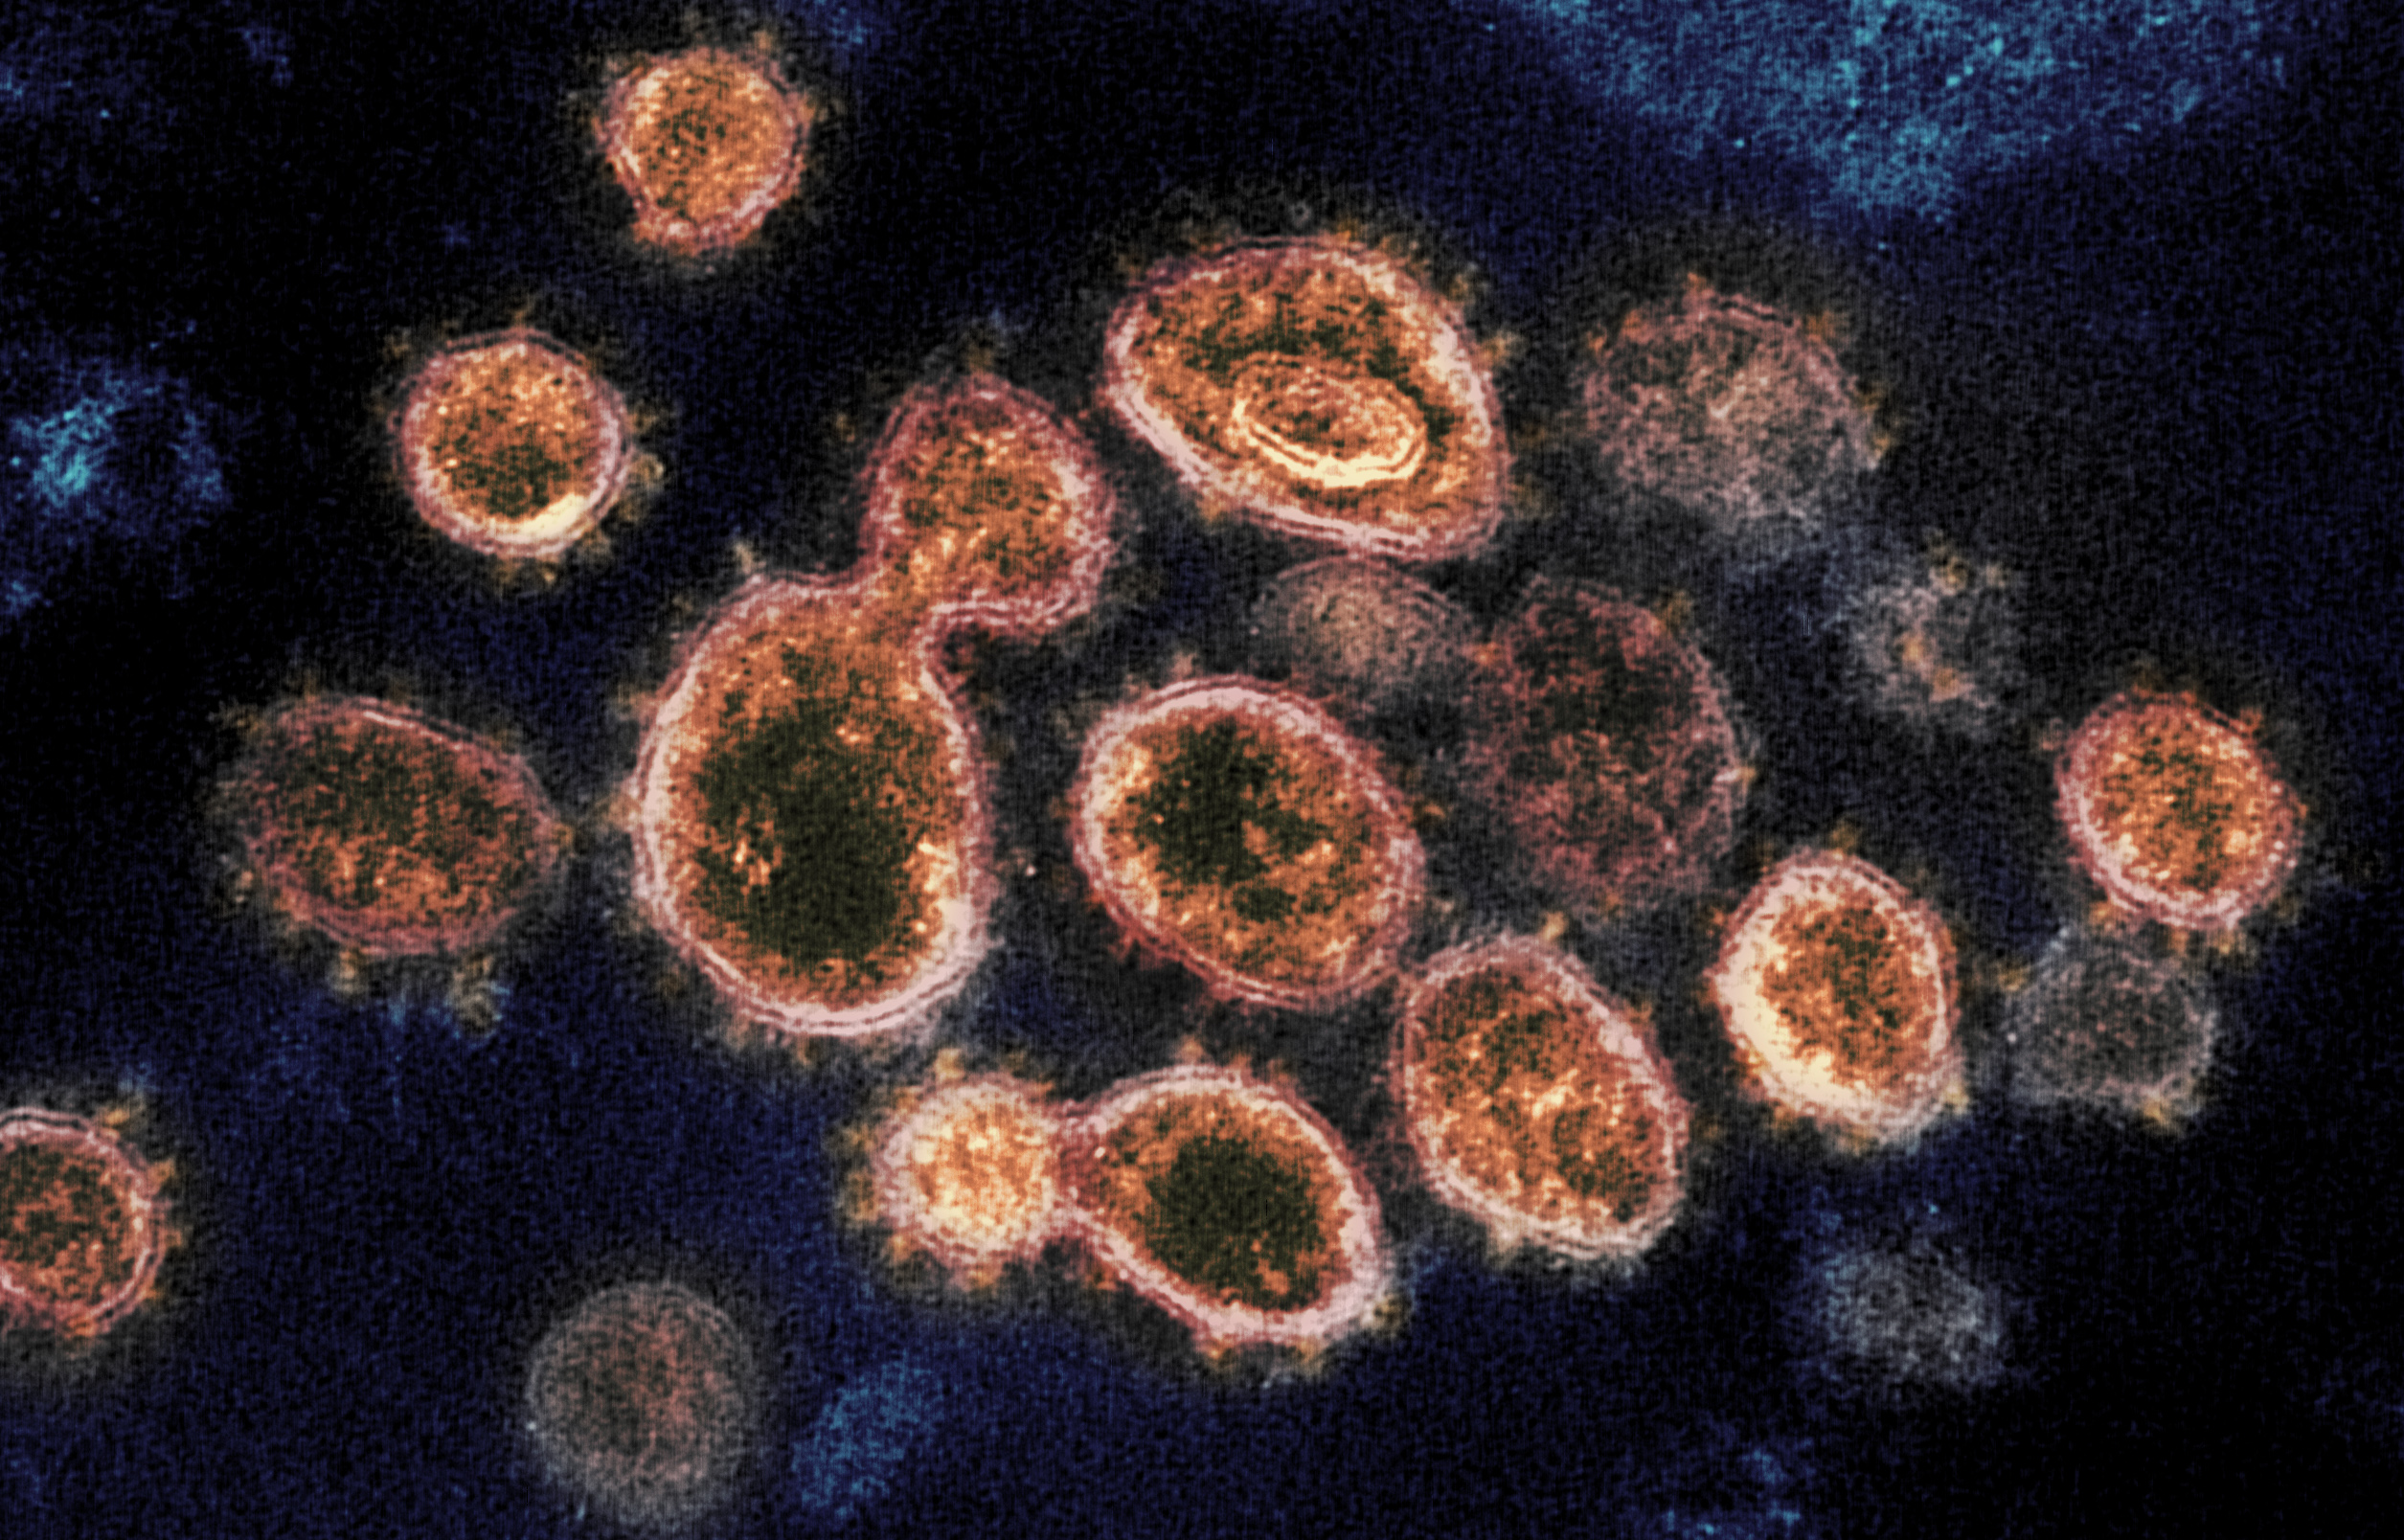 CoronaVirus Image by NIAID Public Domain